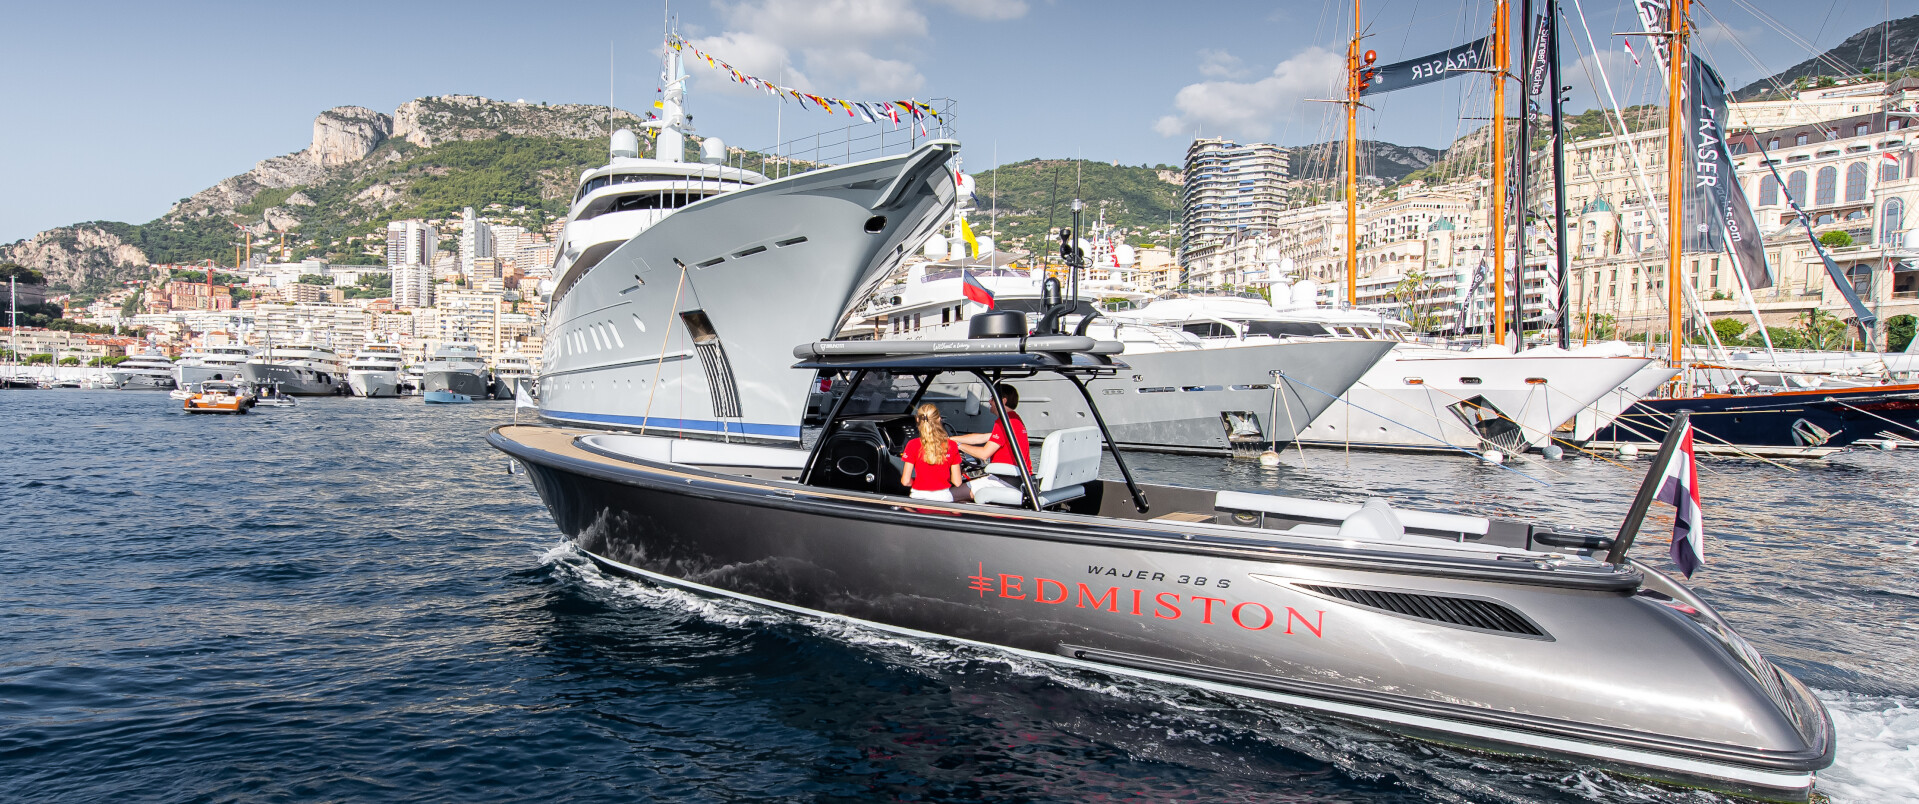 Edmiston announces a stellar line-up for the Monaco Yacht Show 2022